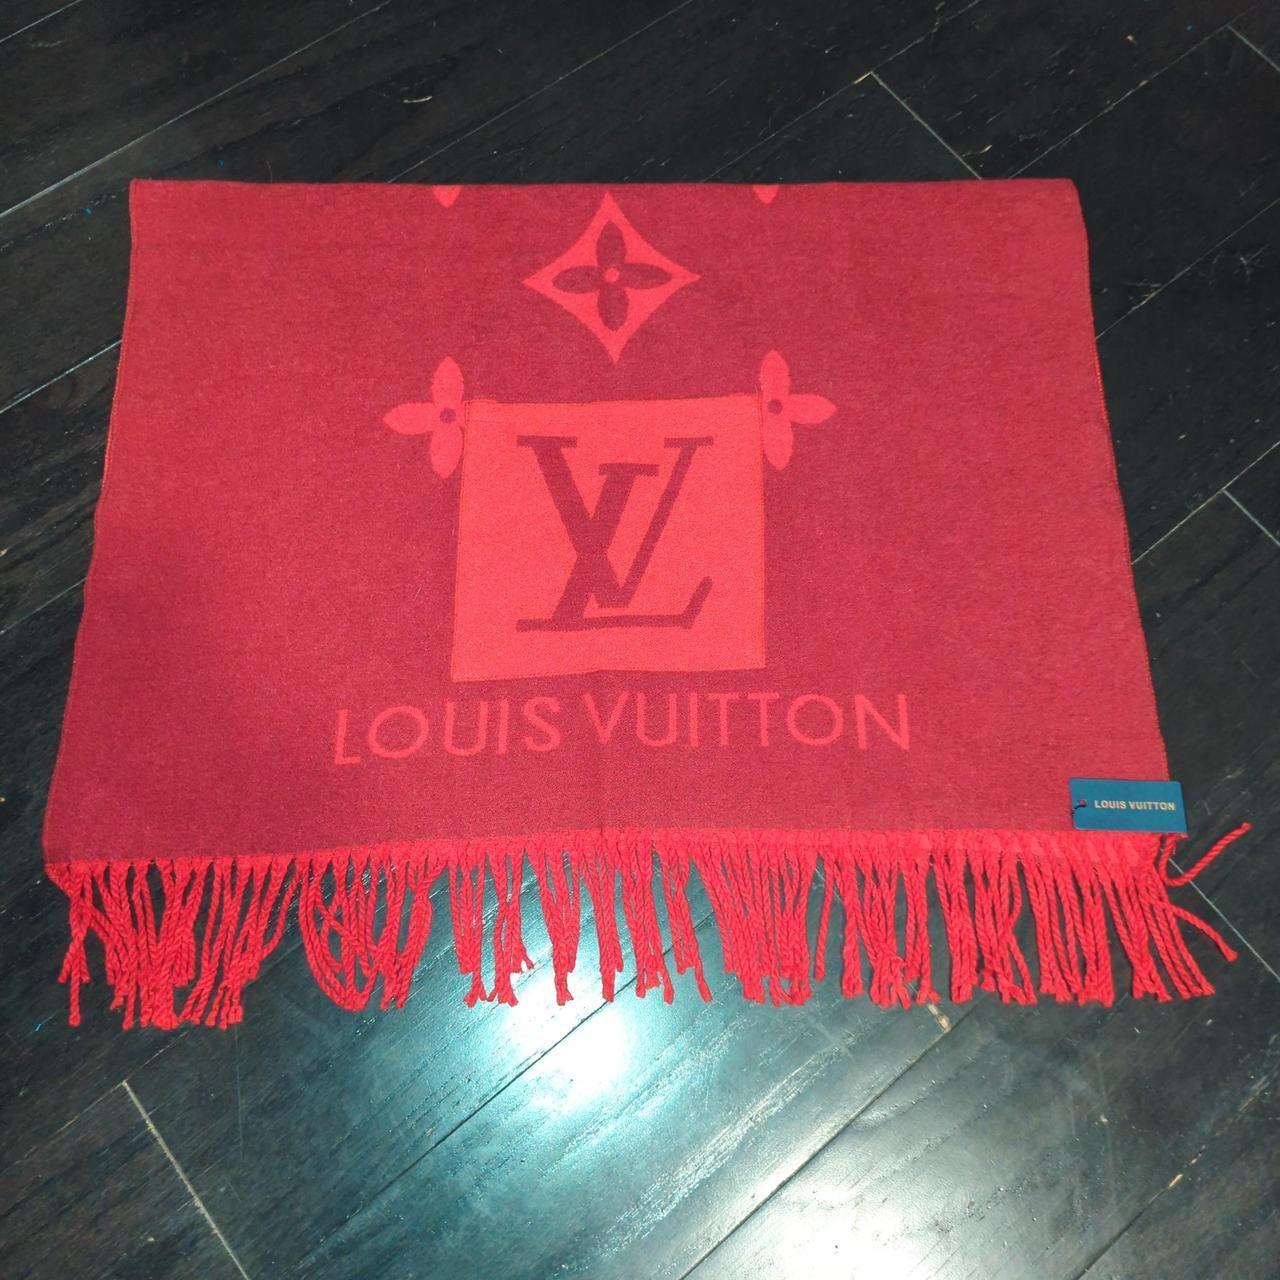 Louis Vuitton Black & Grey Cashmere Reykjavik Monogram Scarf